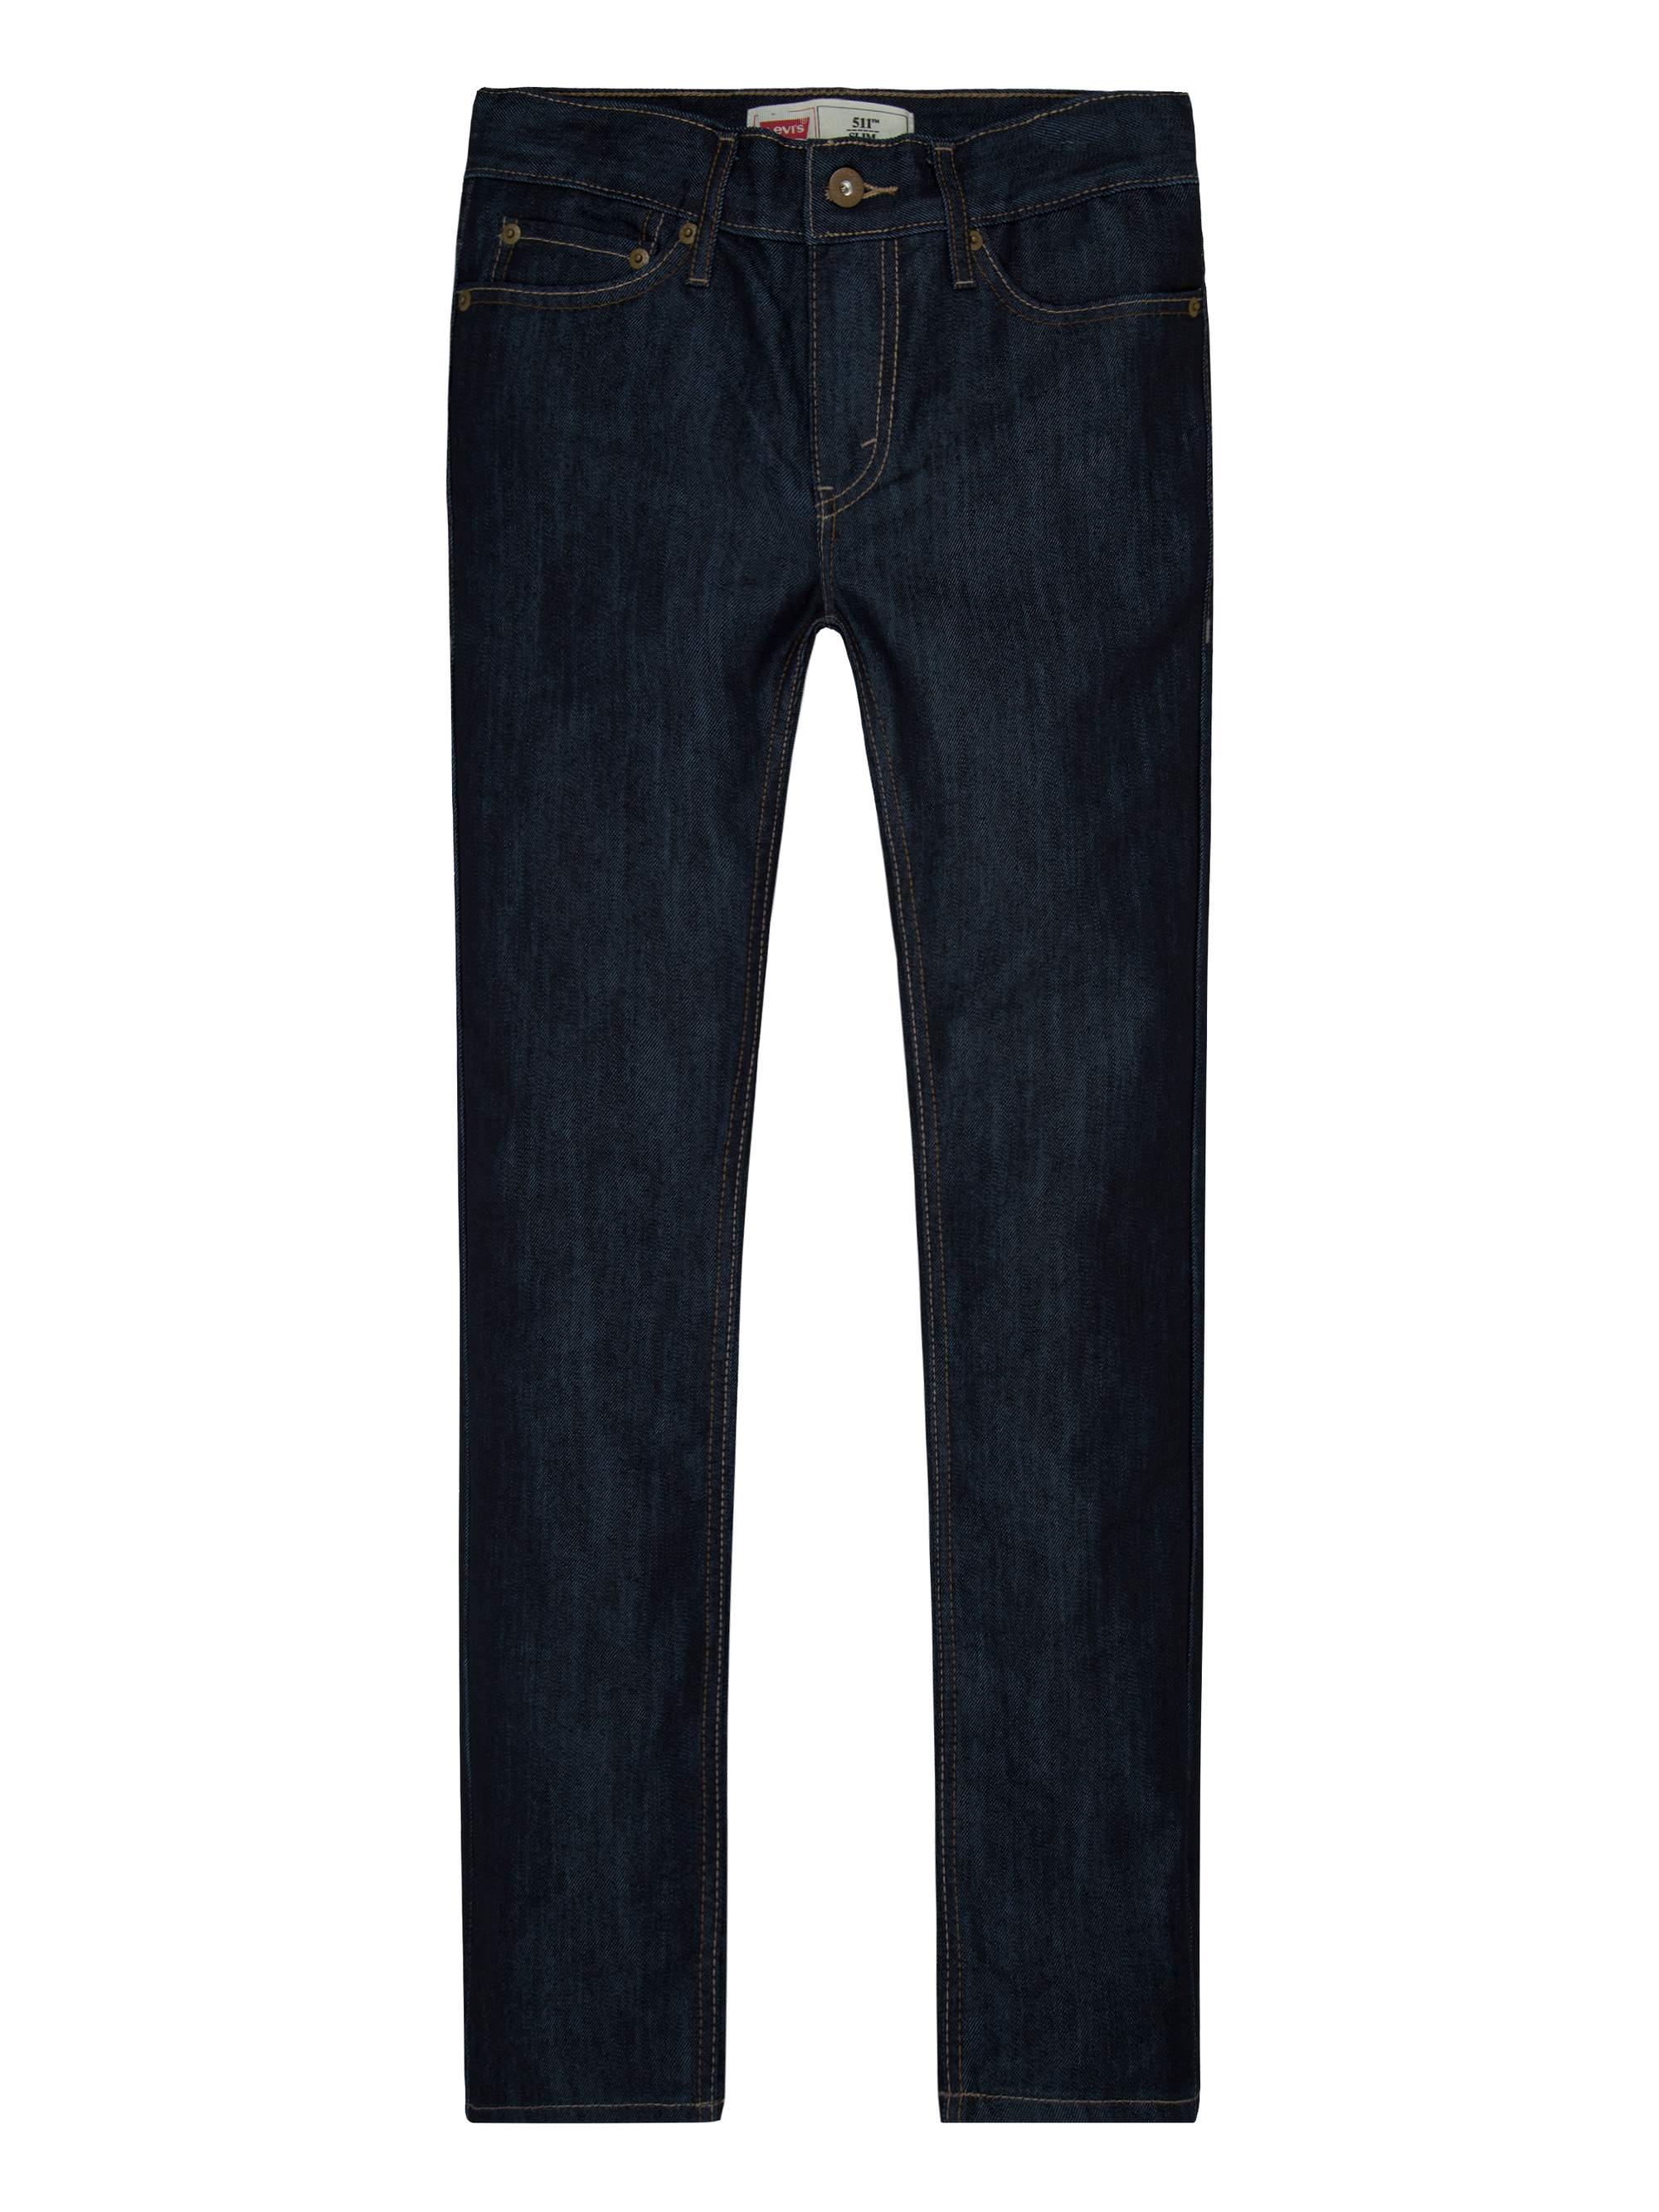 Levi's Boys' 511 Slim Fit Jeans, Sizes 4-20 - image 1 of 2